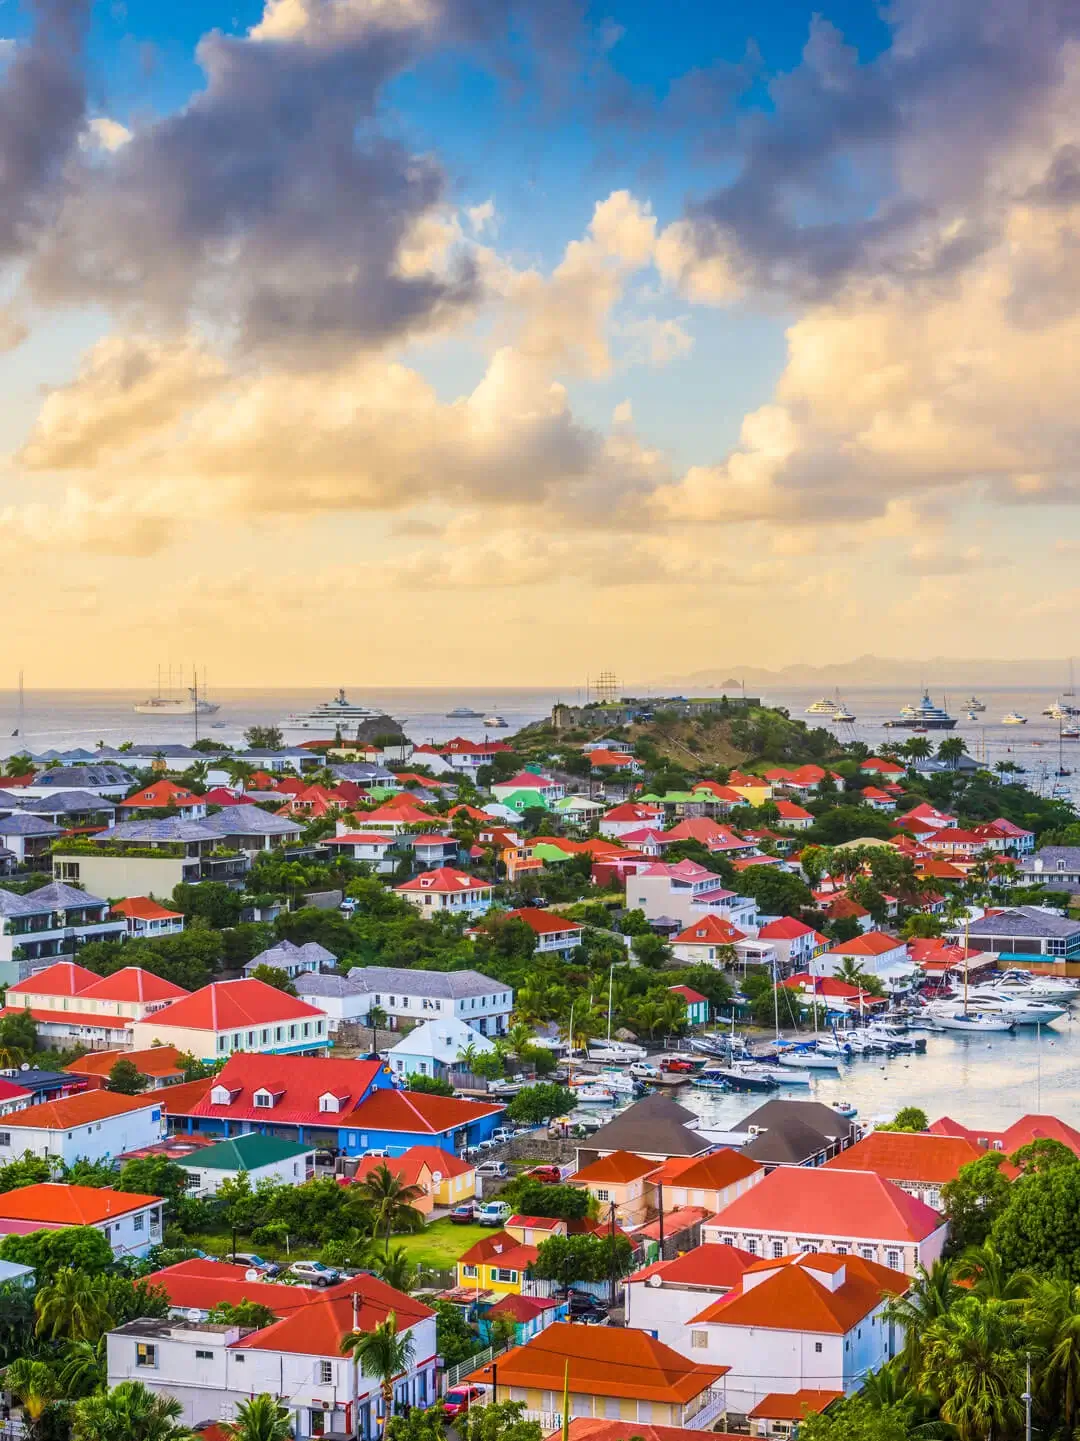 Luxury caribbean resorts on the island of St. Barths.